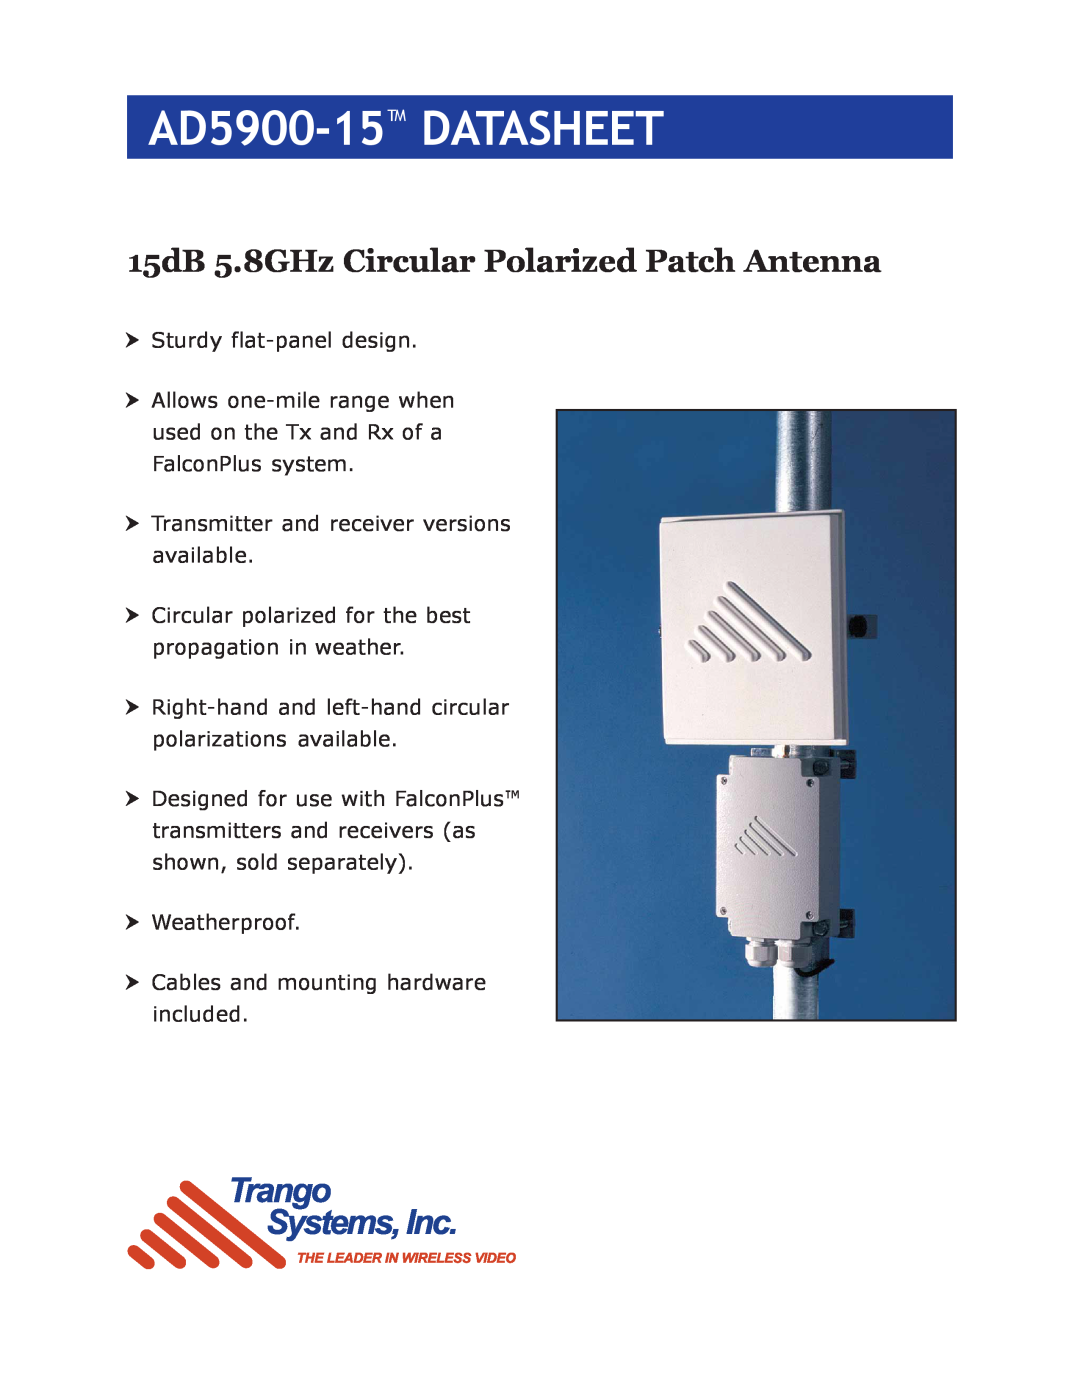 Trango Broadband AD5900-15-R manual AD5900-15 DATASHEET, 15dB 5.8GHz Circular Polarized Patch Antenna 